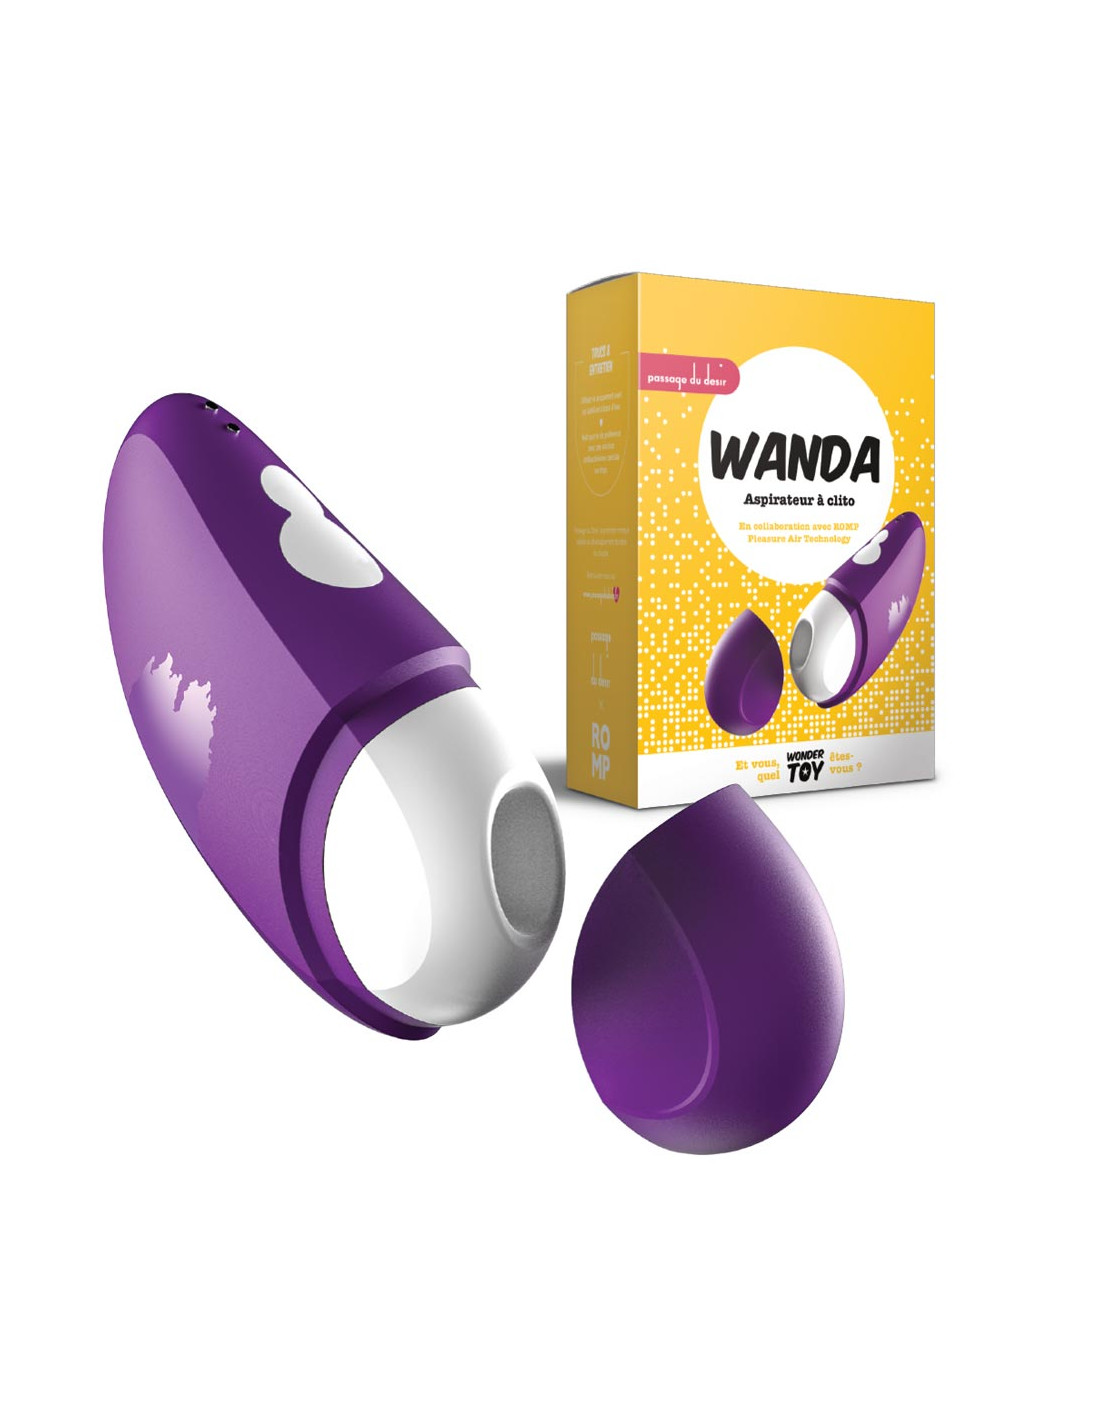 Wondertoy Wanda stimulateur sans contact oKpOW60s